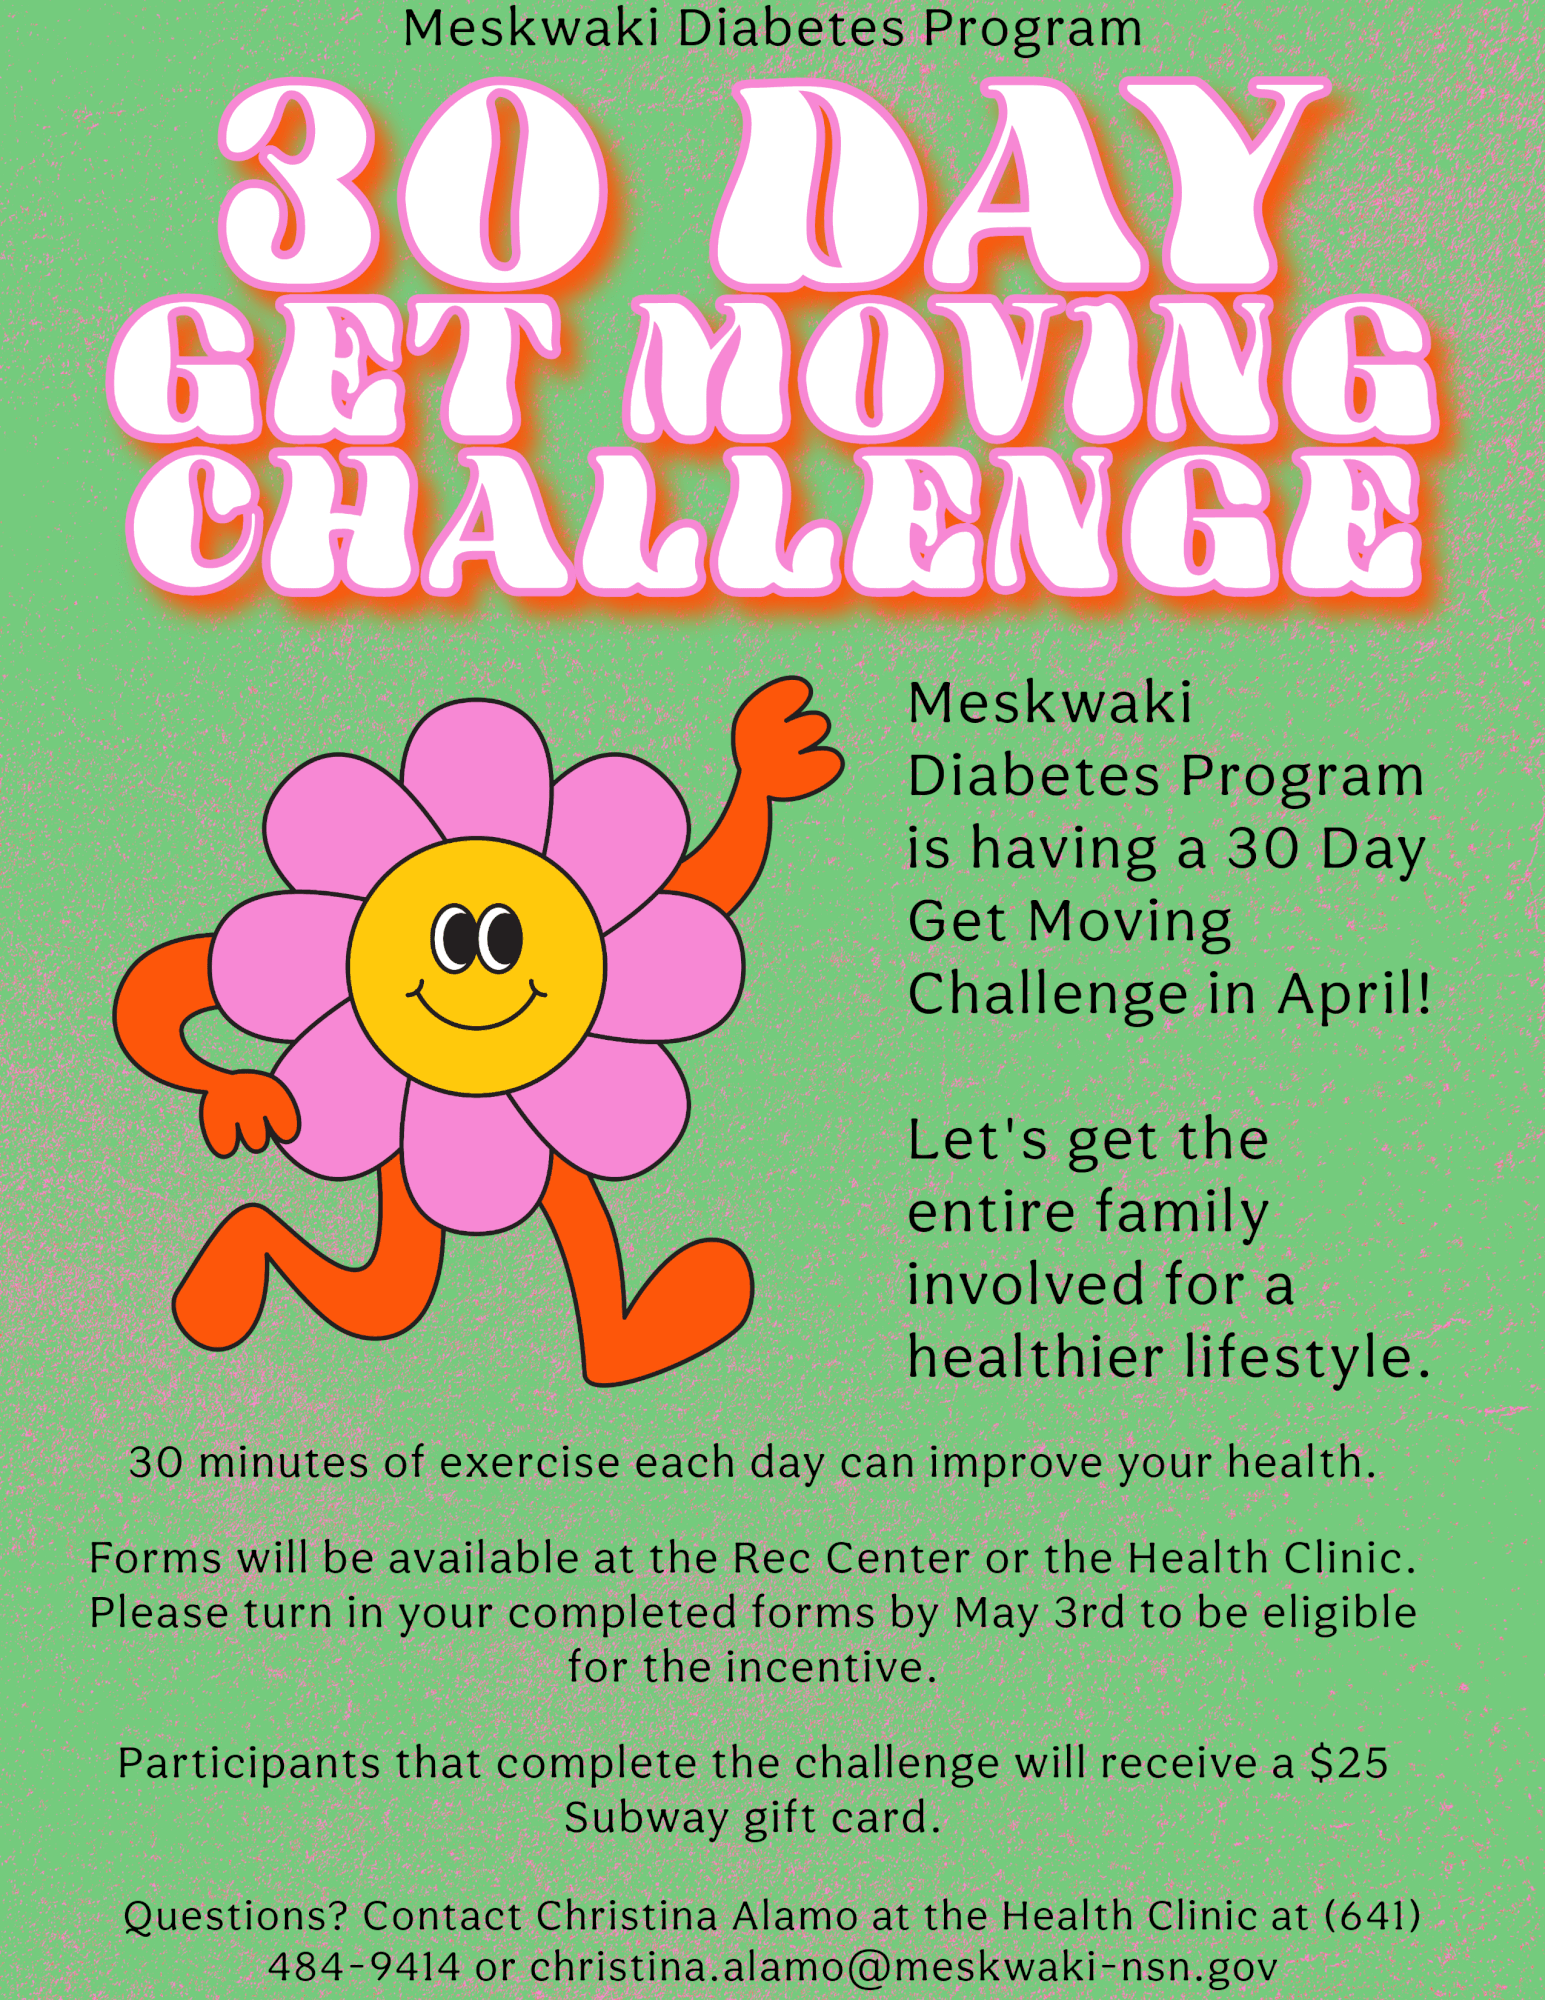 Diabetes Program: April 30 Day Get Moving Challenge